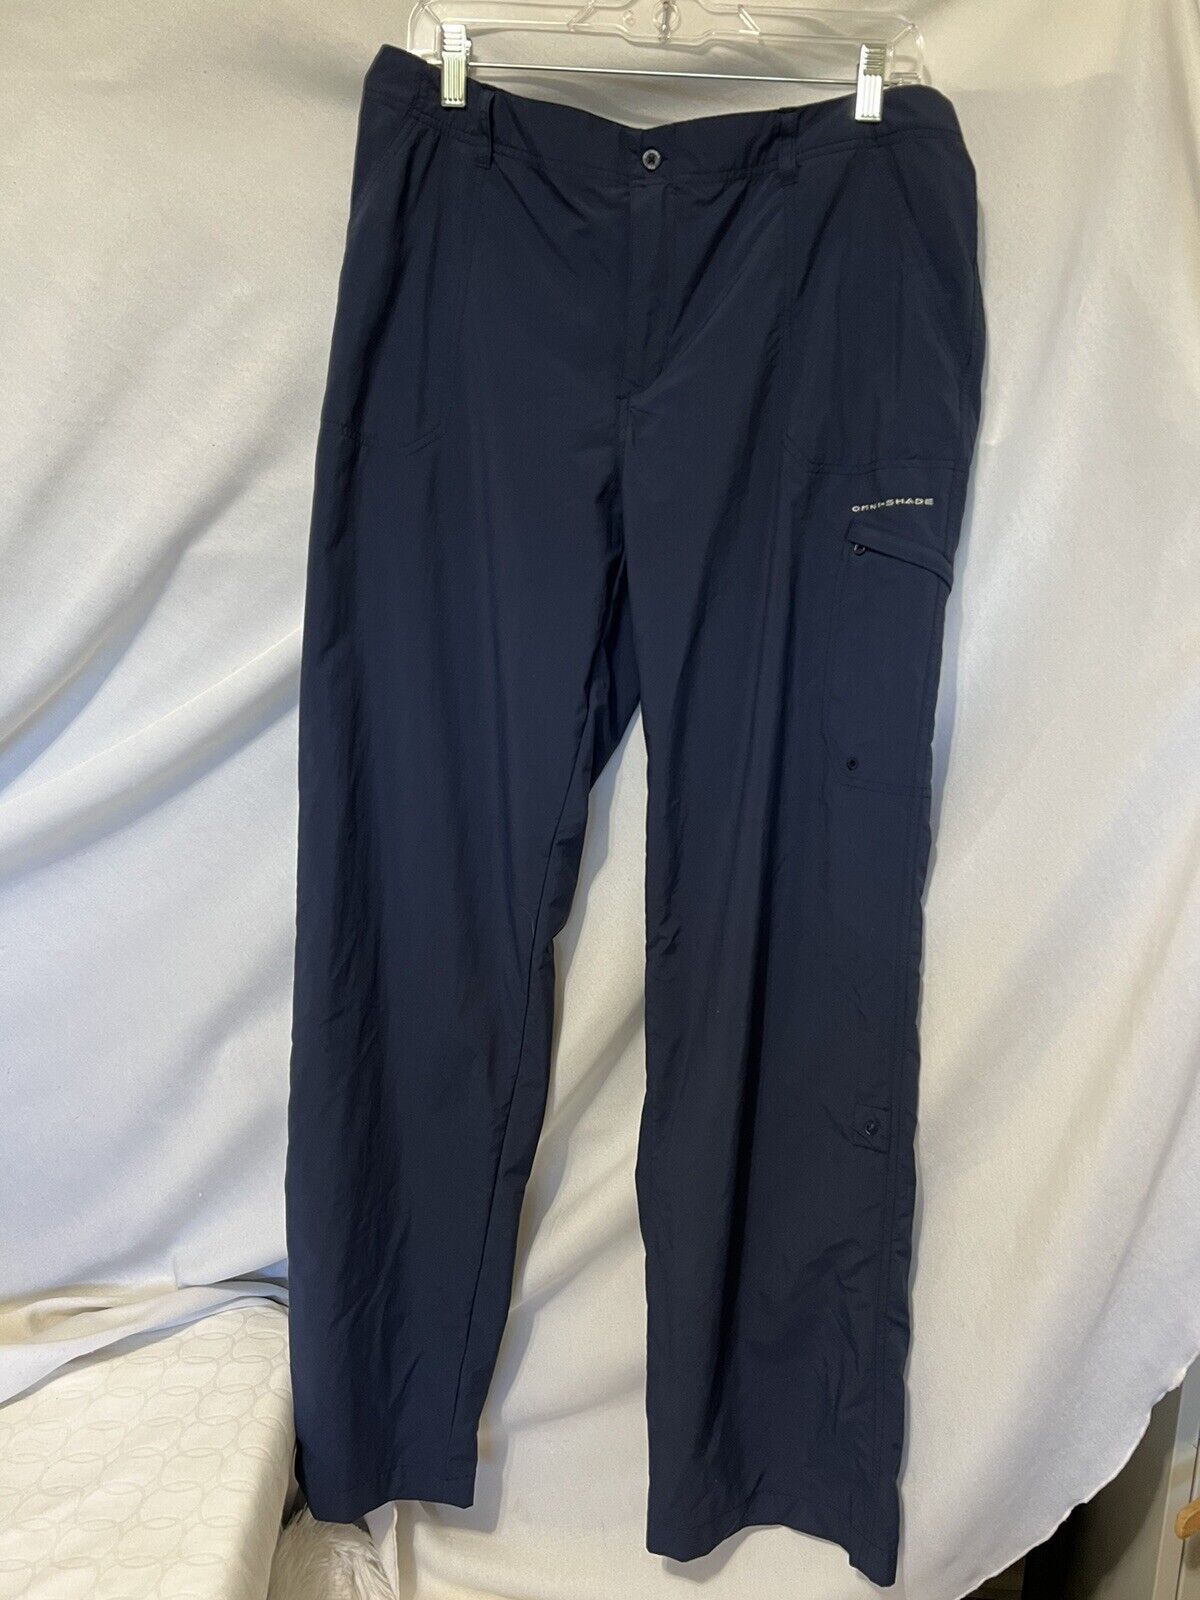 Columbia Pfg Performance Gear Pants Women's Size 14 Navy Omni Shade Euc